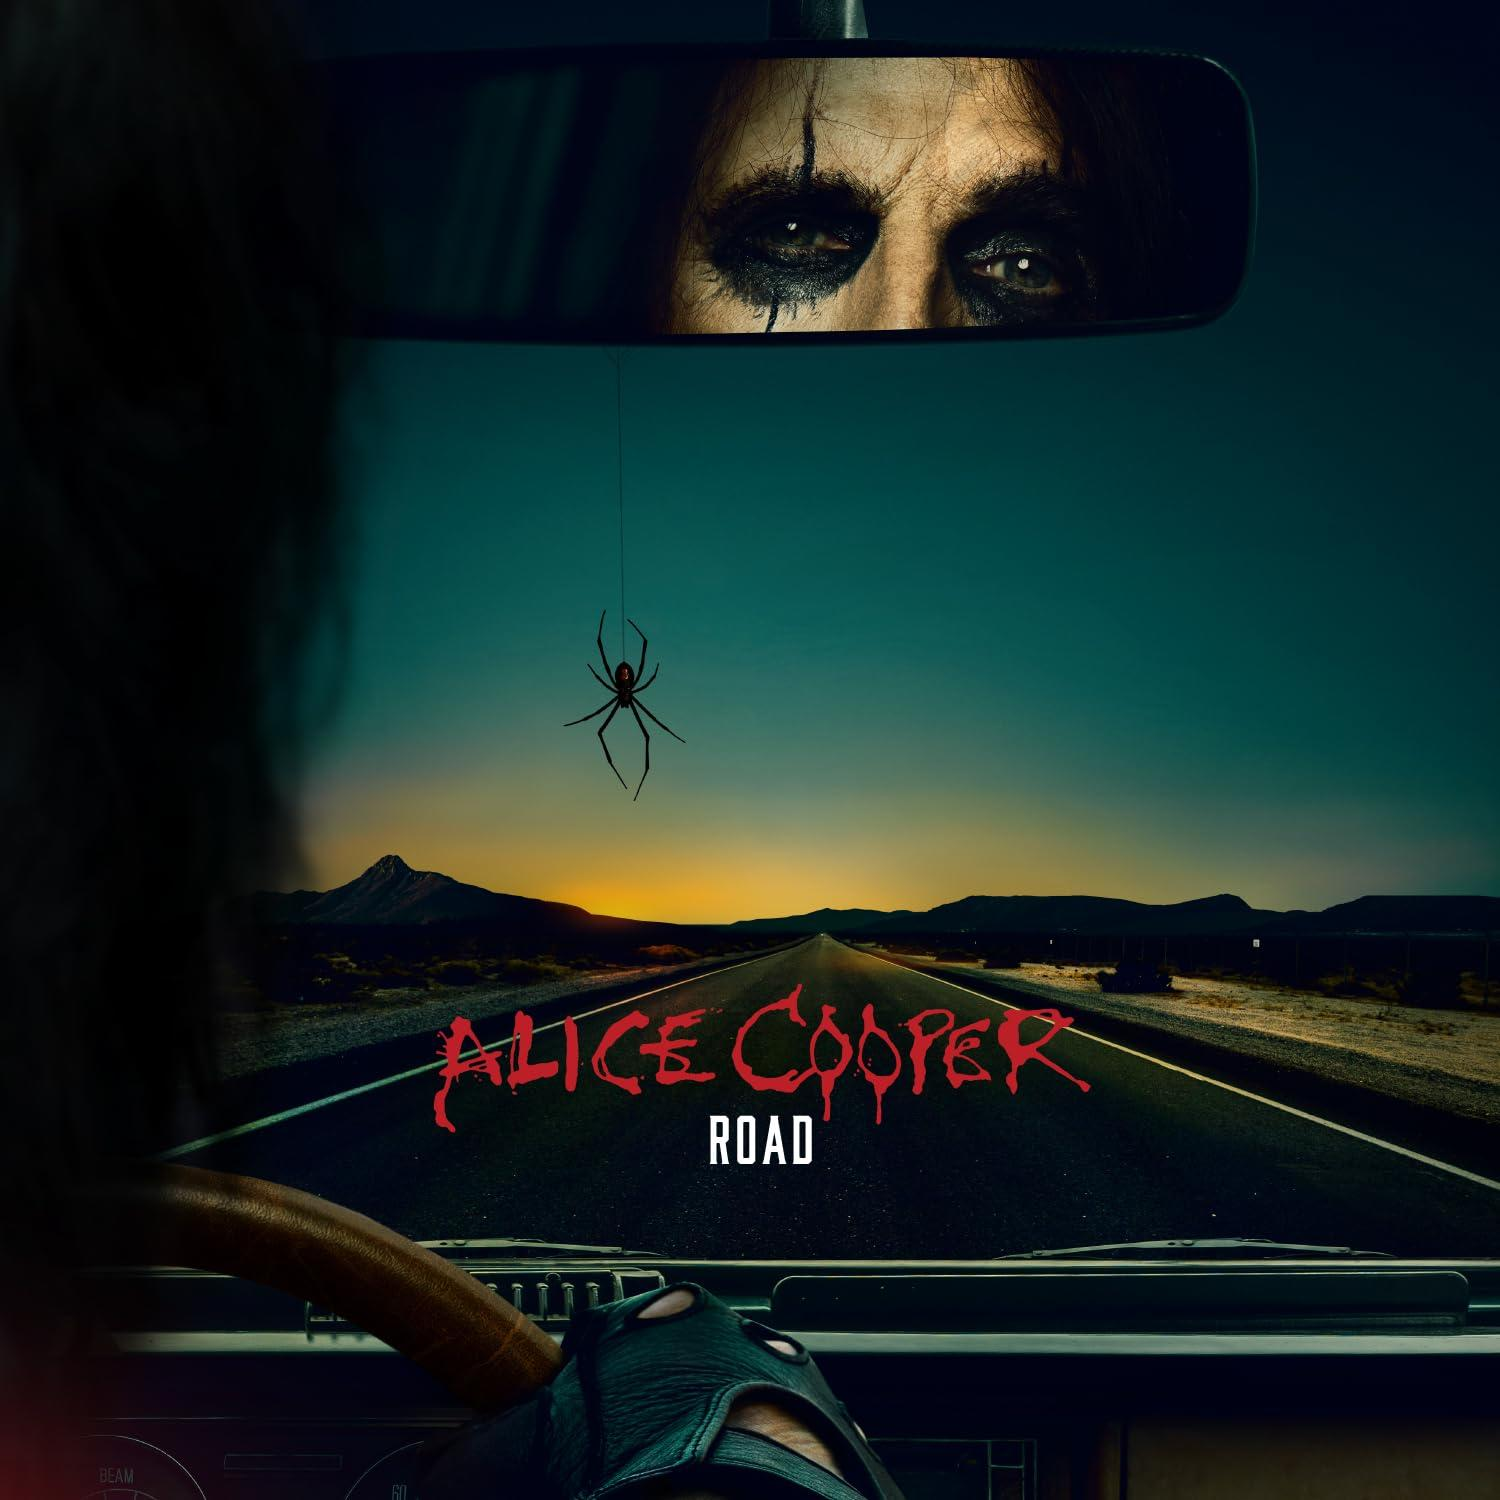 Alice Cooper - ROAD - + Video) DVD (CD